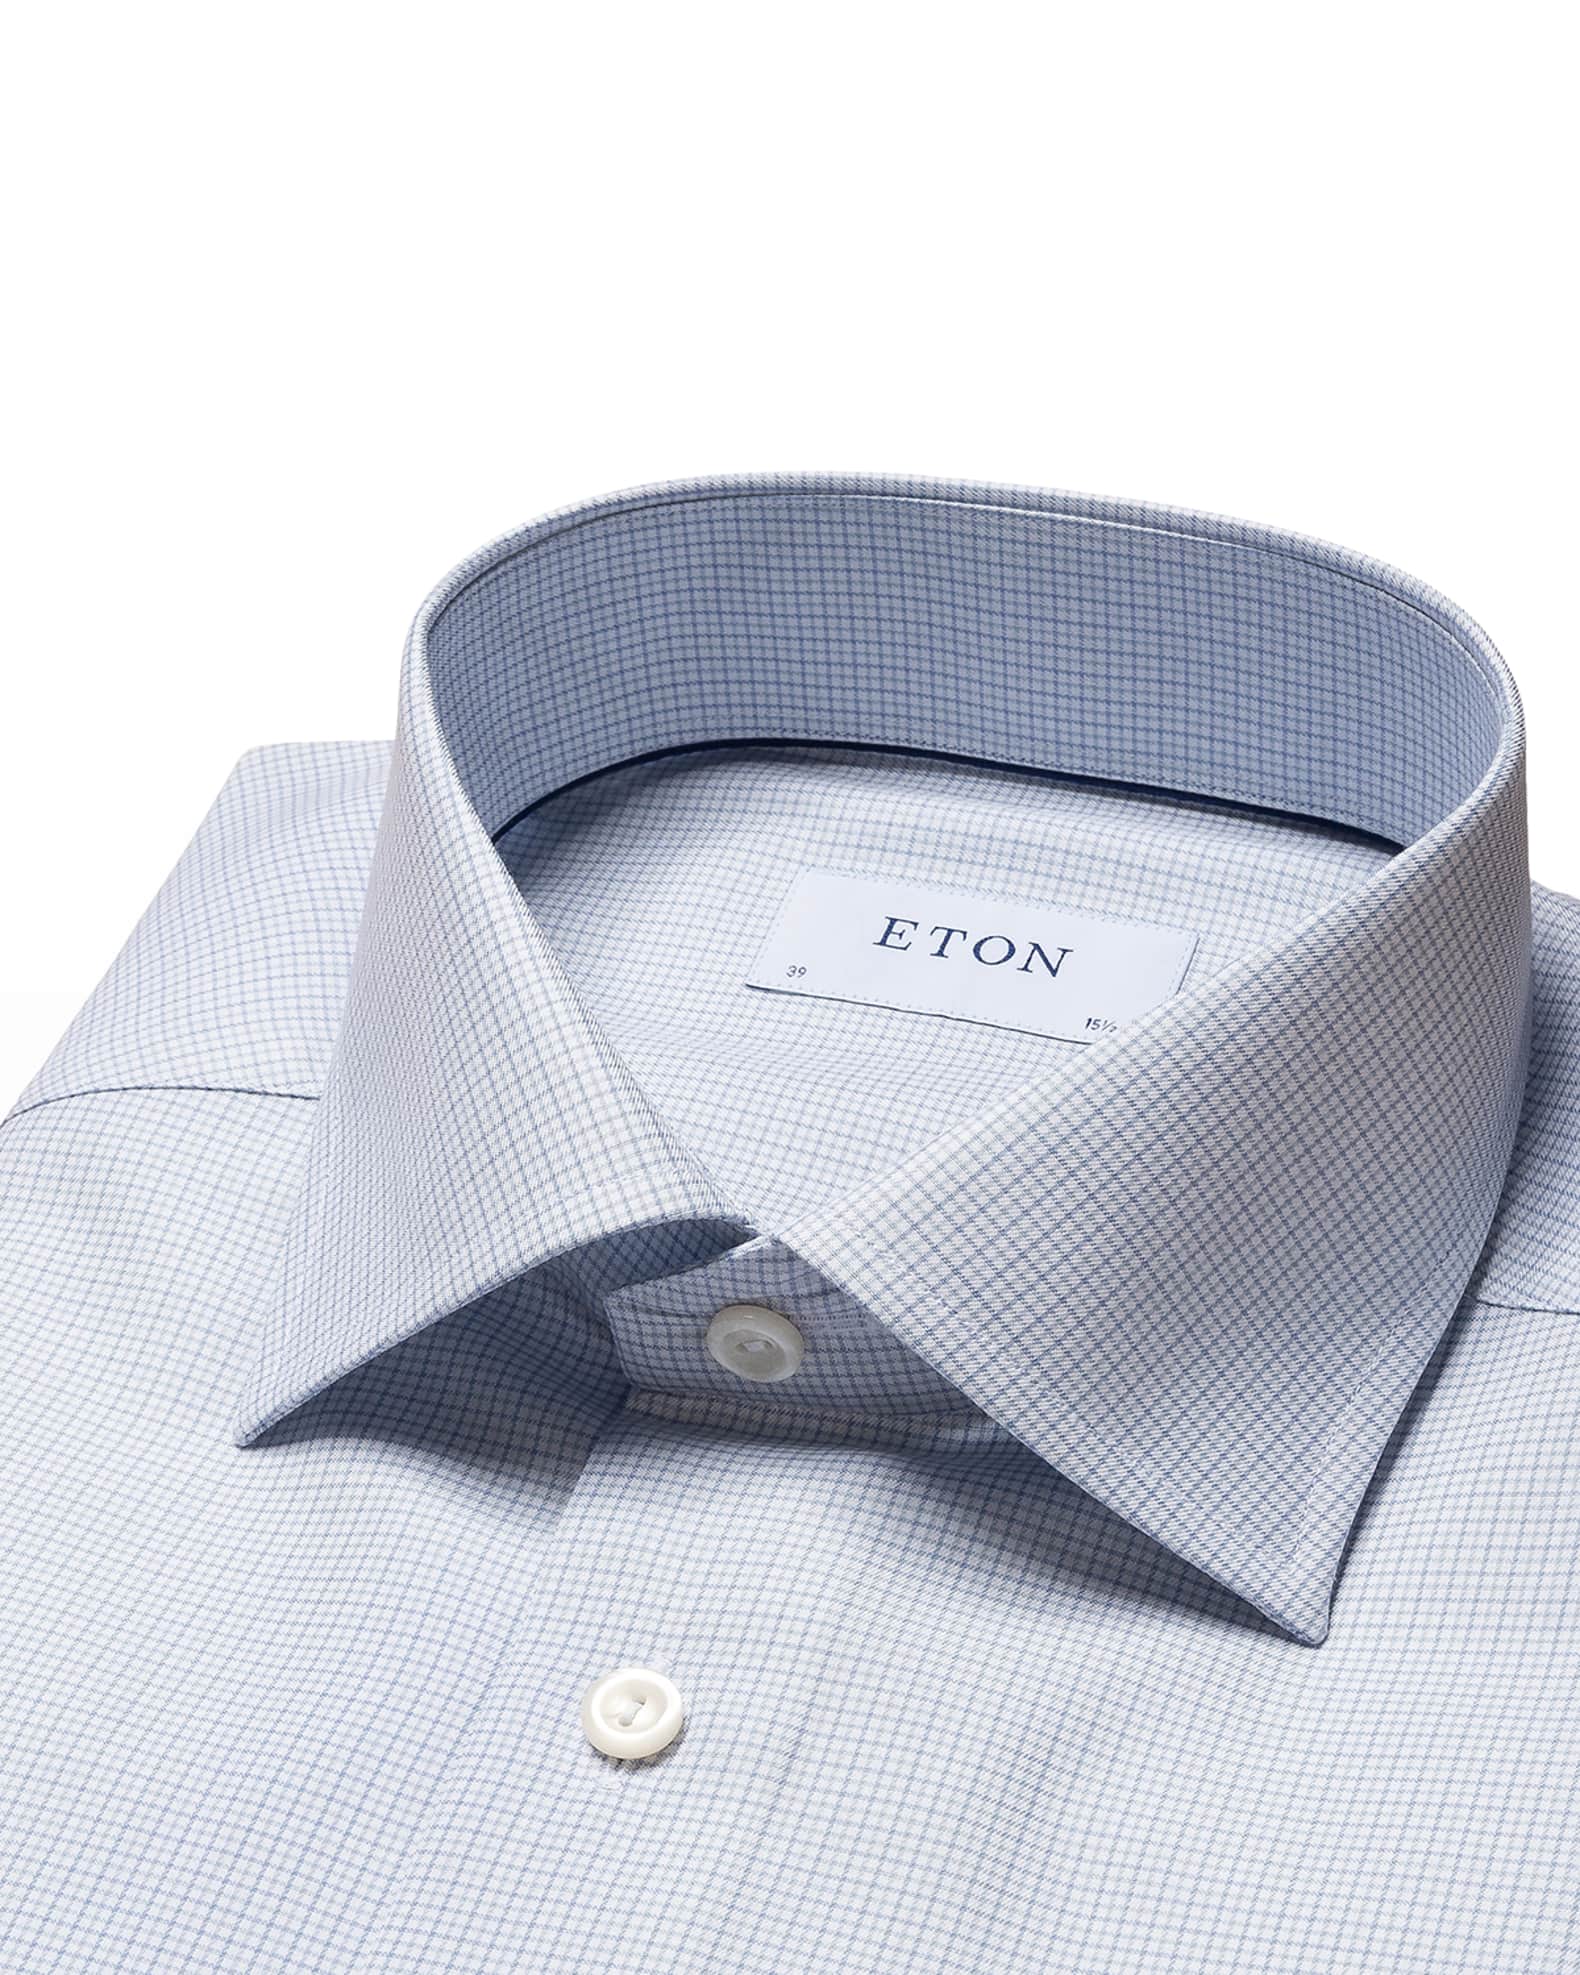 Eton Mens Slim Fit Check Stretch Dress Shirt Neiman Marcus